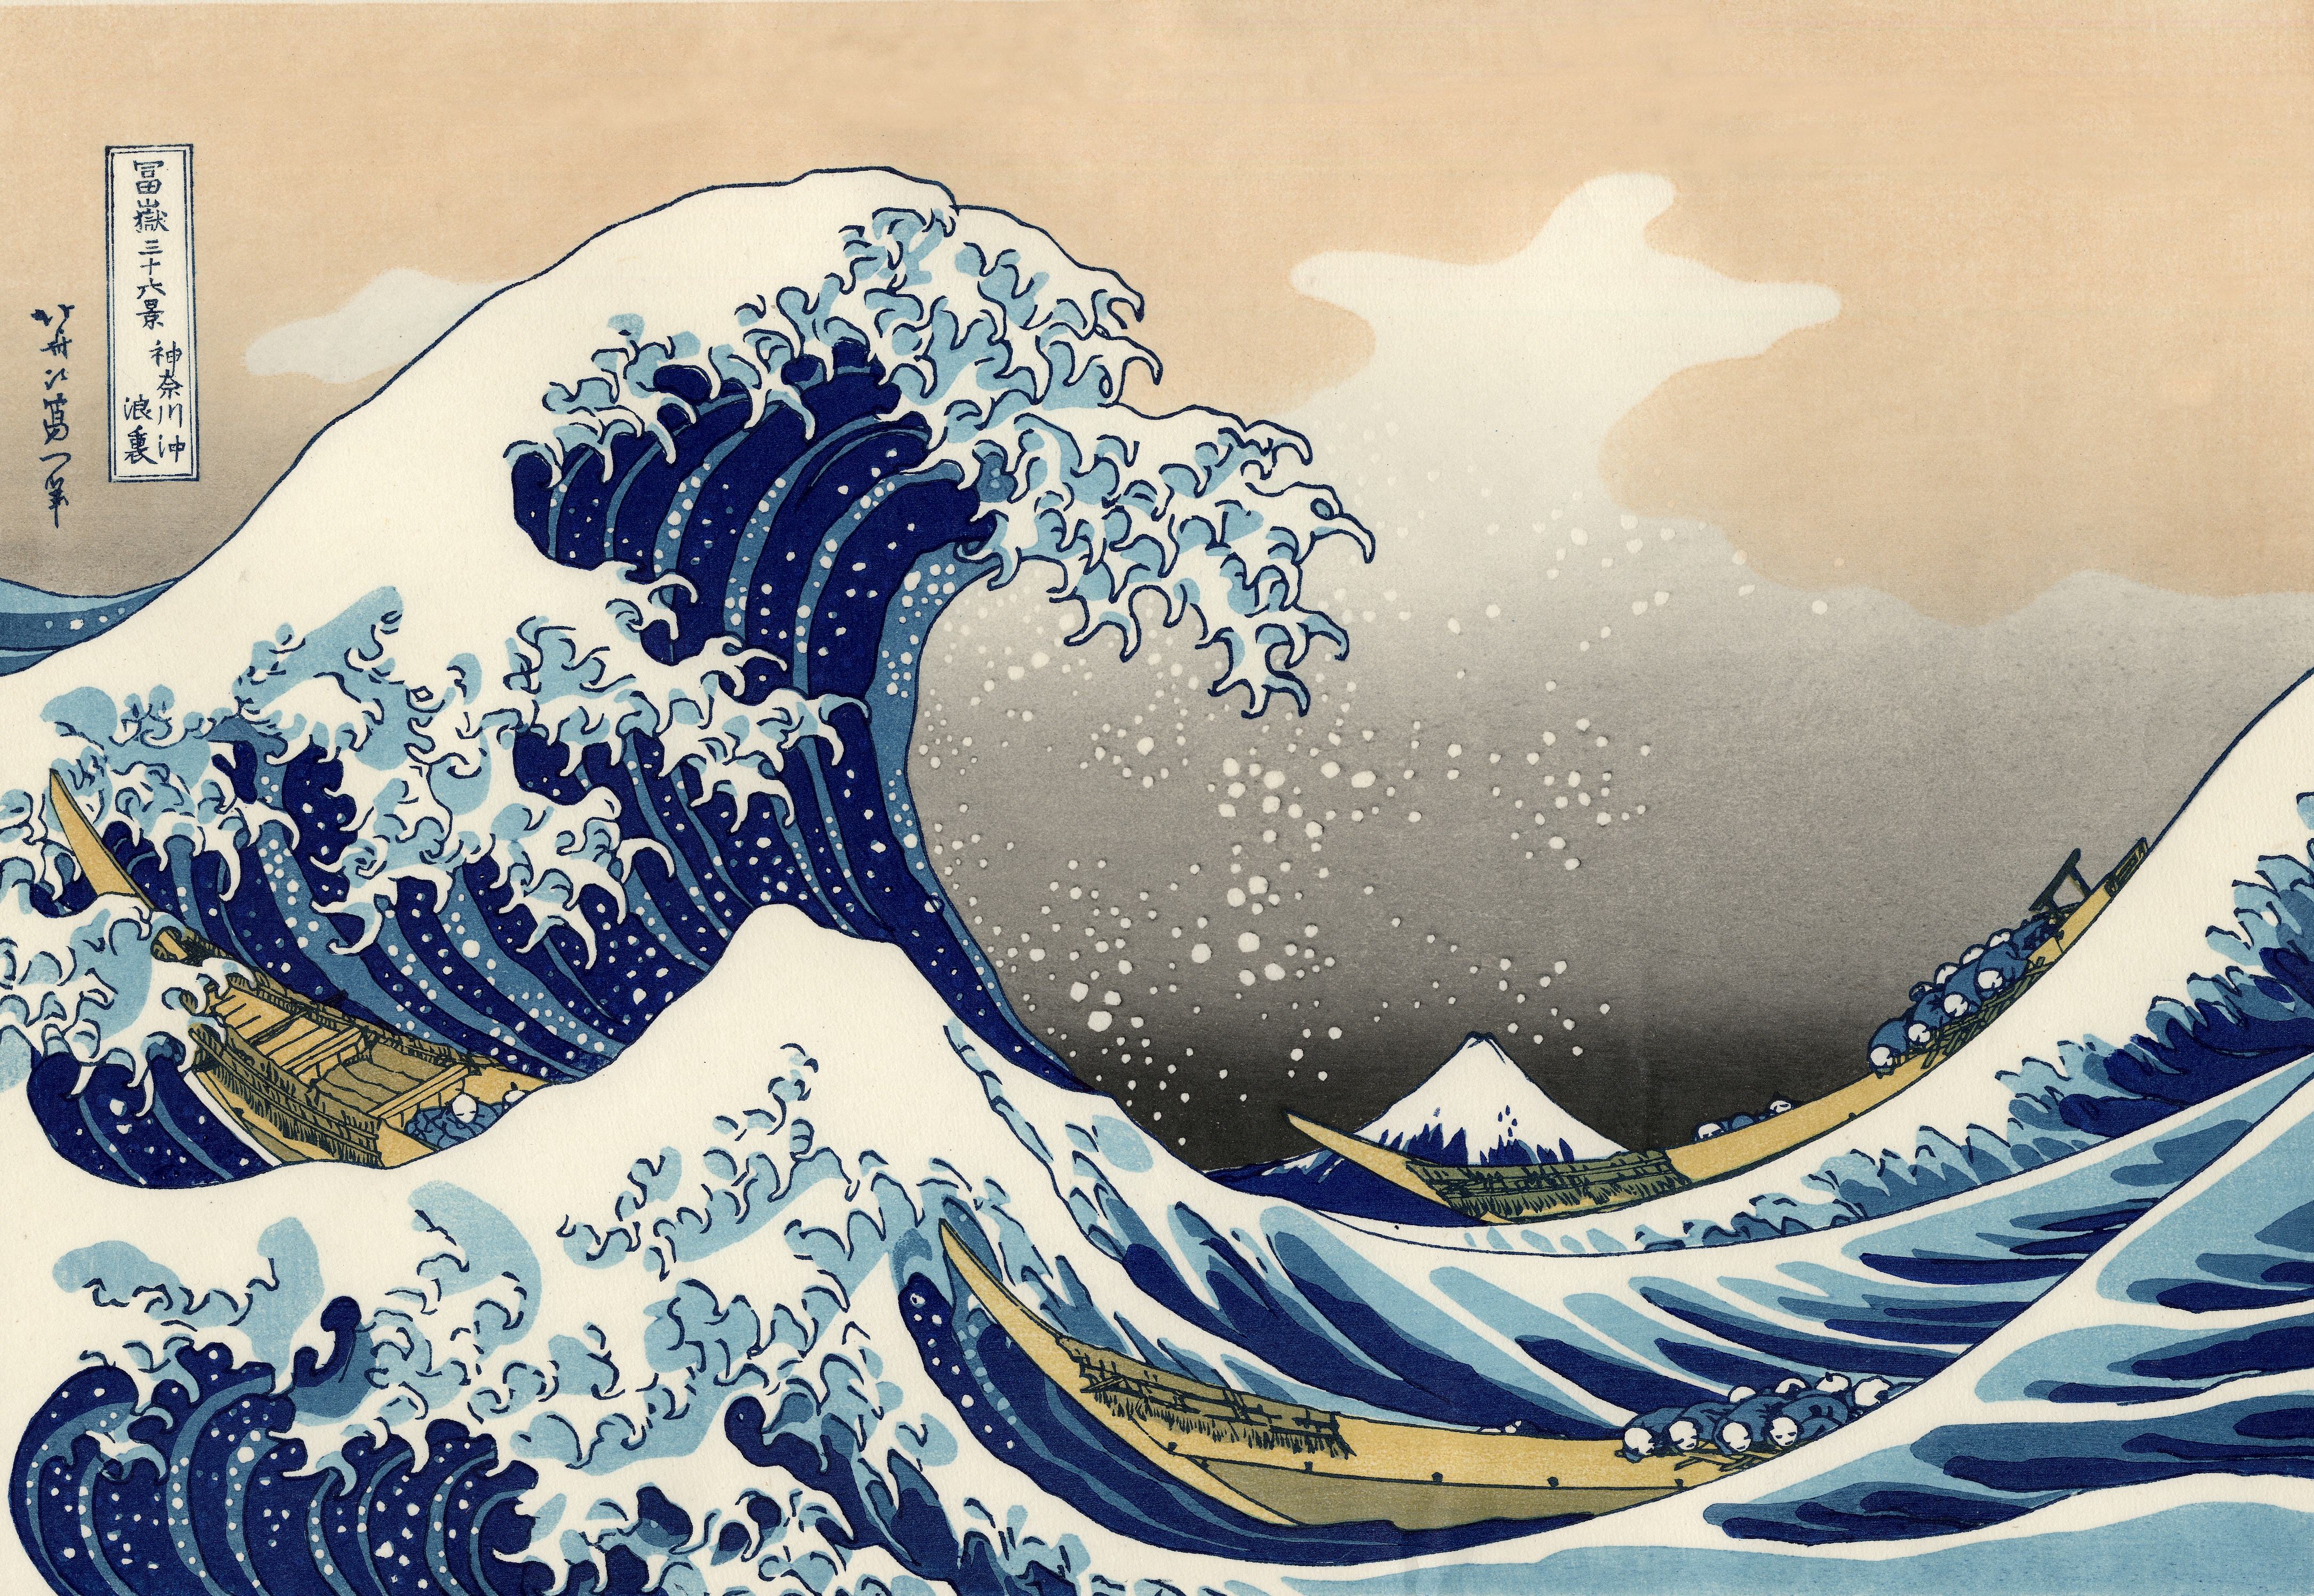 wave, the great wave off kanagawa, artistic 4K Ultra